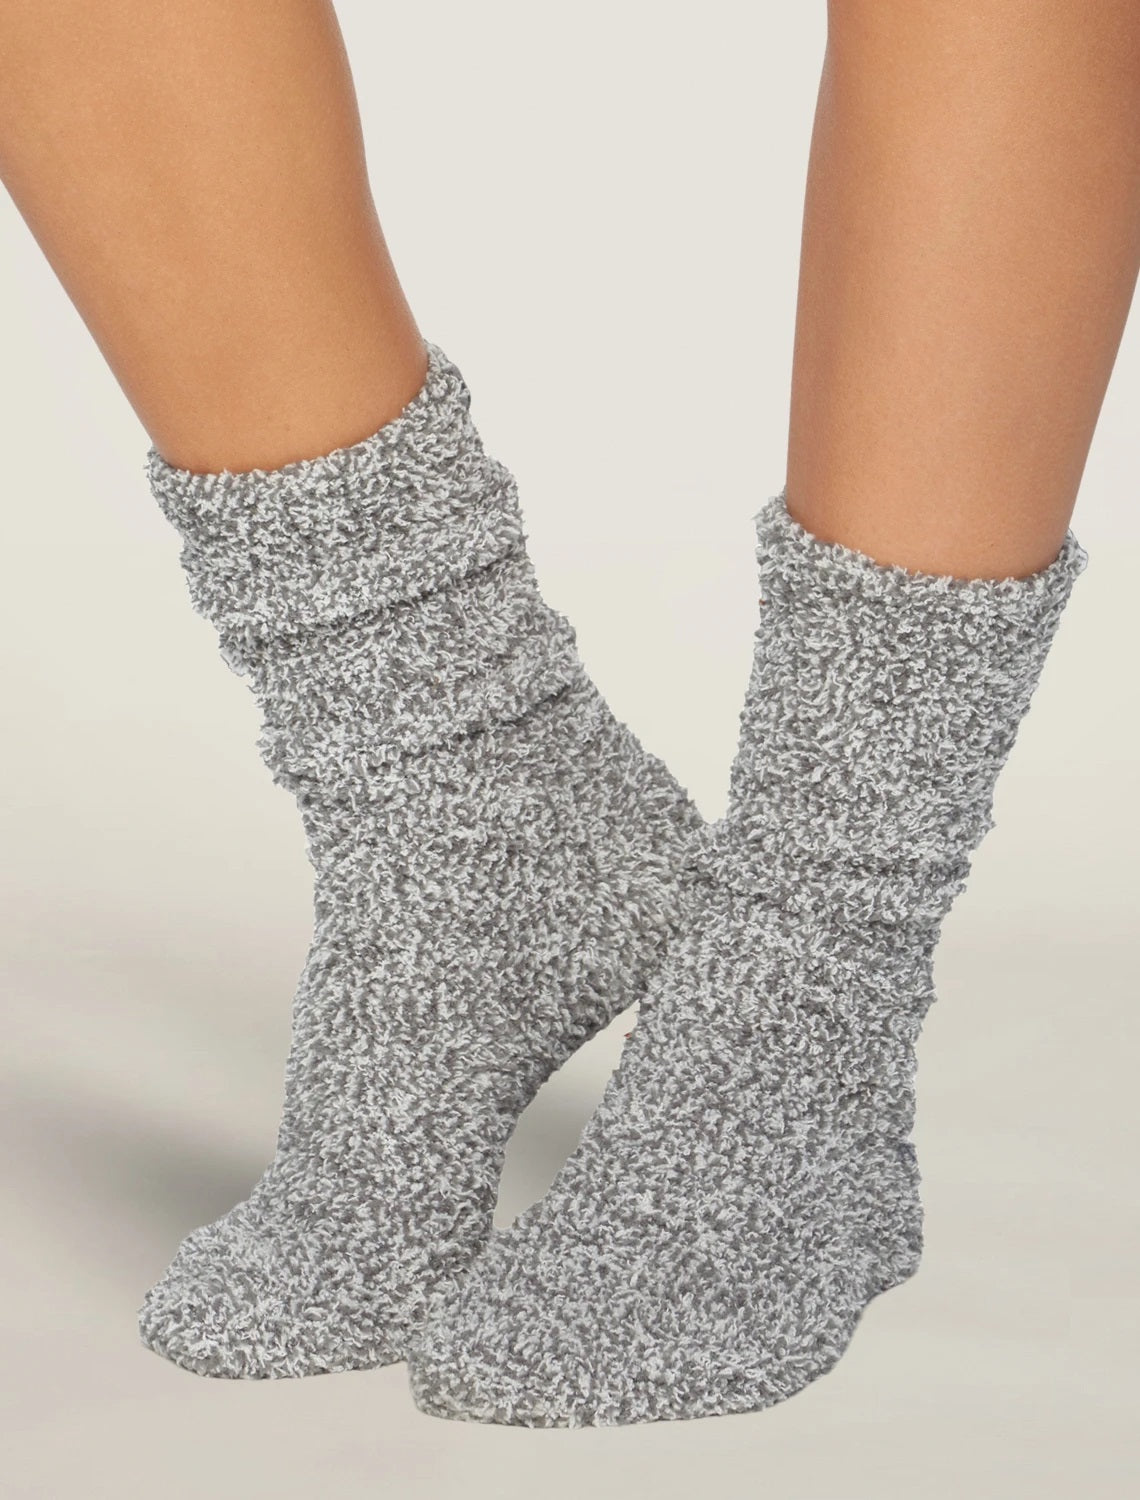 Barefoot Dreams CozyChic® Heathered Women's Socks- Graphite/White